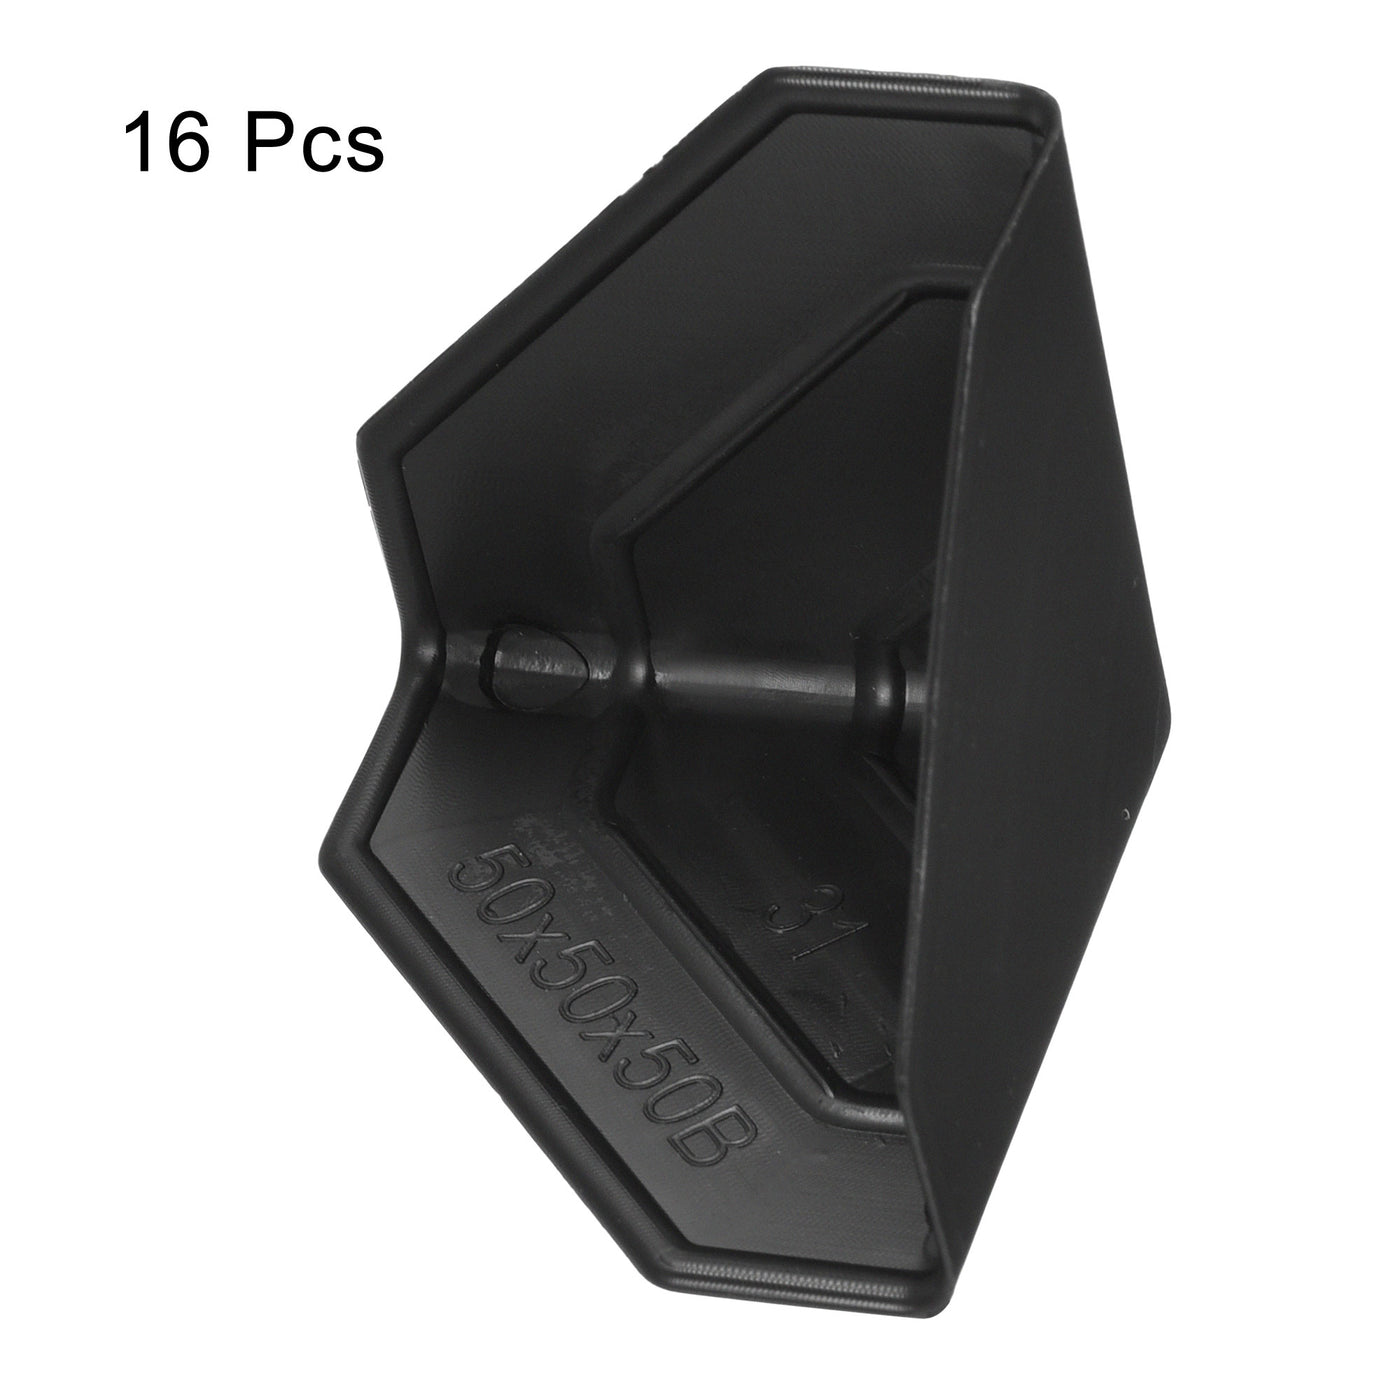 Harfington Corner Protector PP Plastic 2" x 2" x 2" for Carton Black Pack of 16